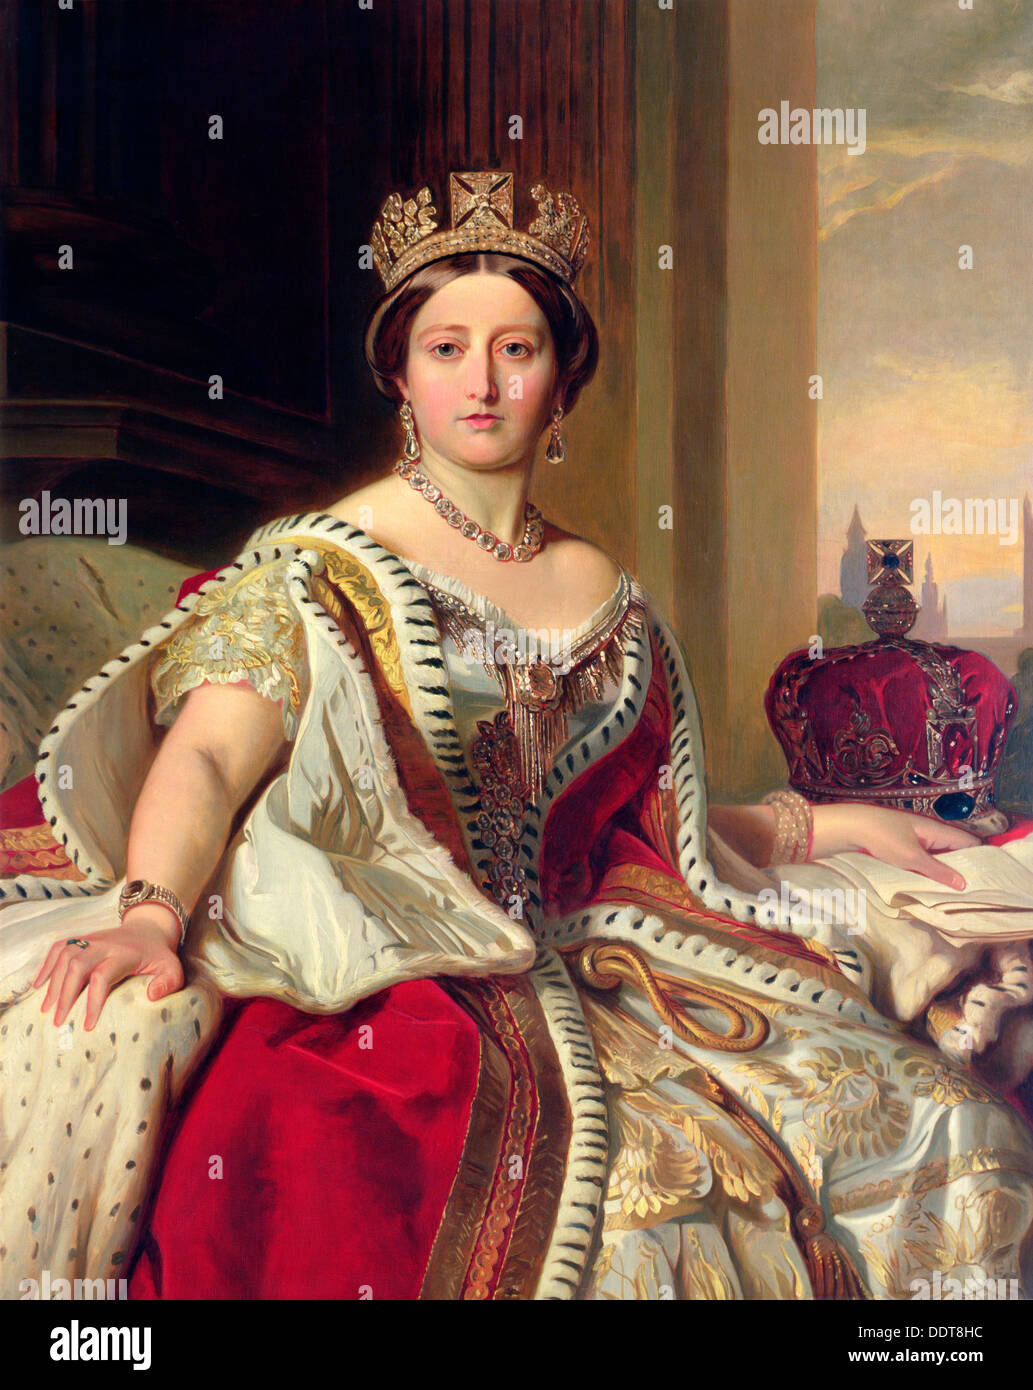 La reina Victoria, 1859. Artista: Franz Xaver Winterhalter Foto de stock